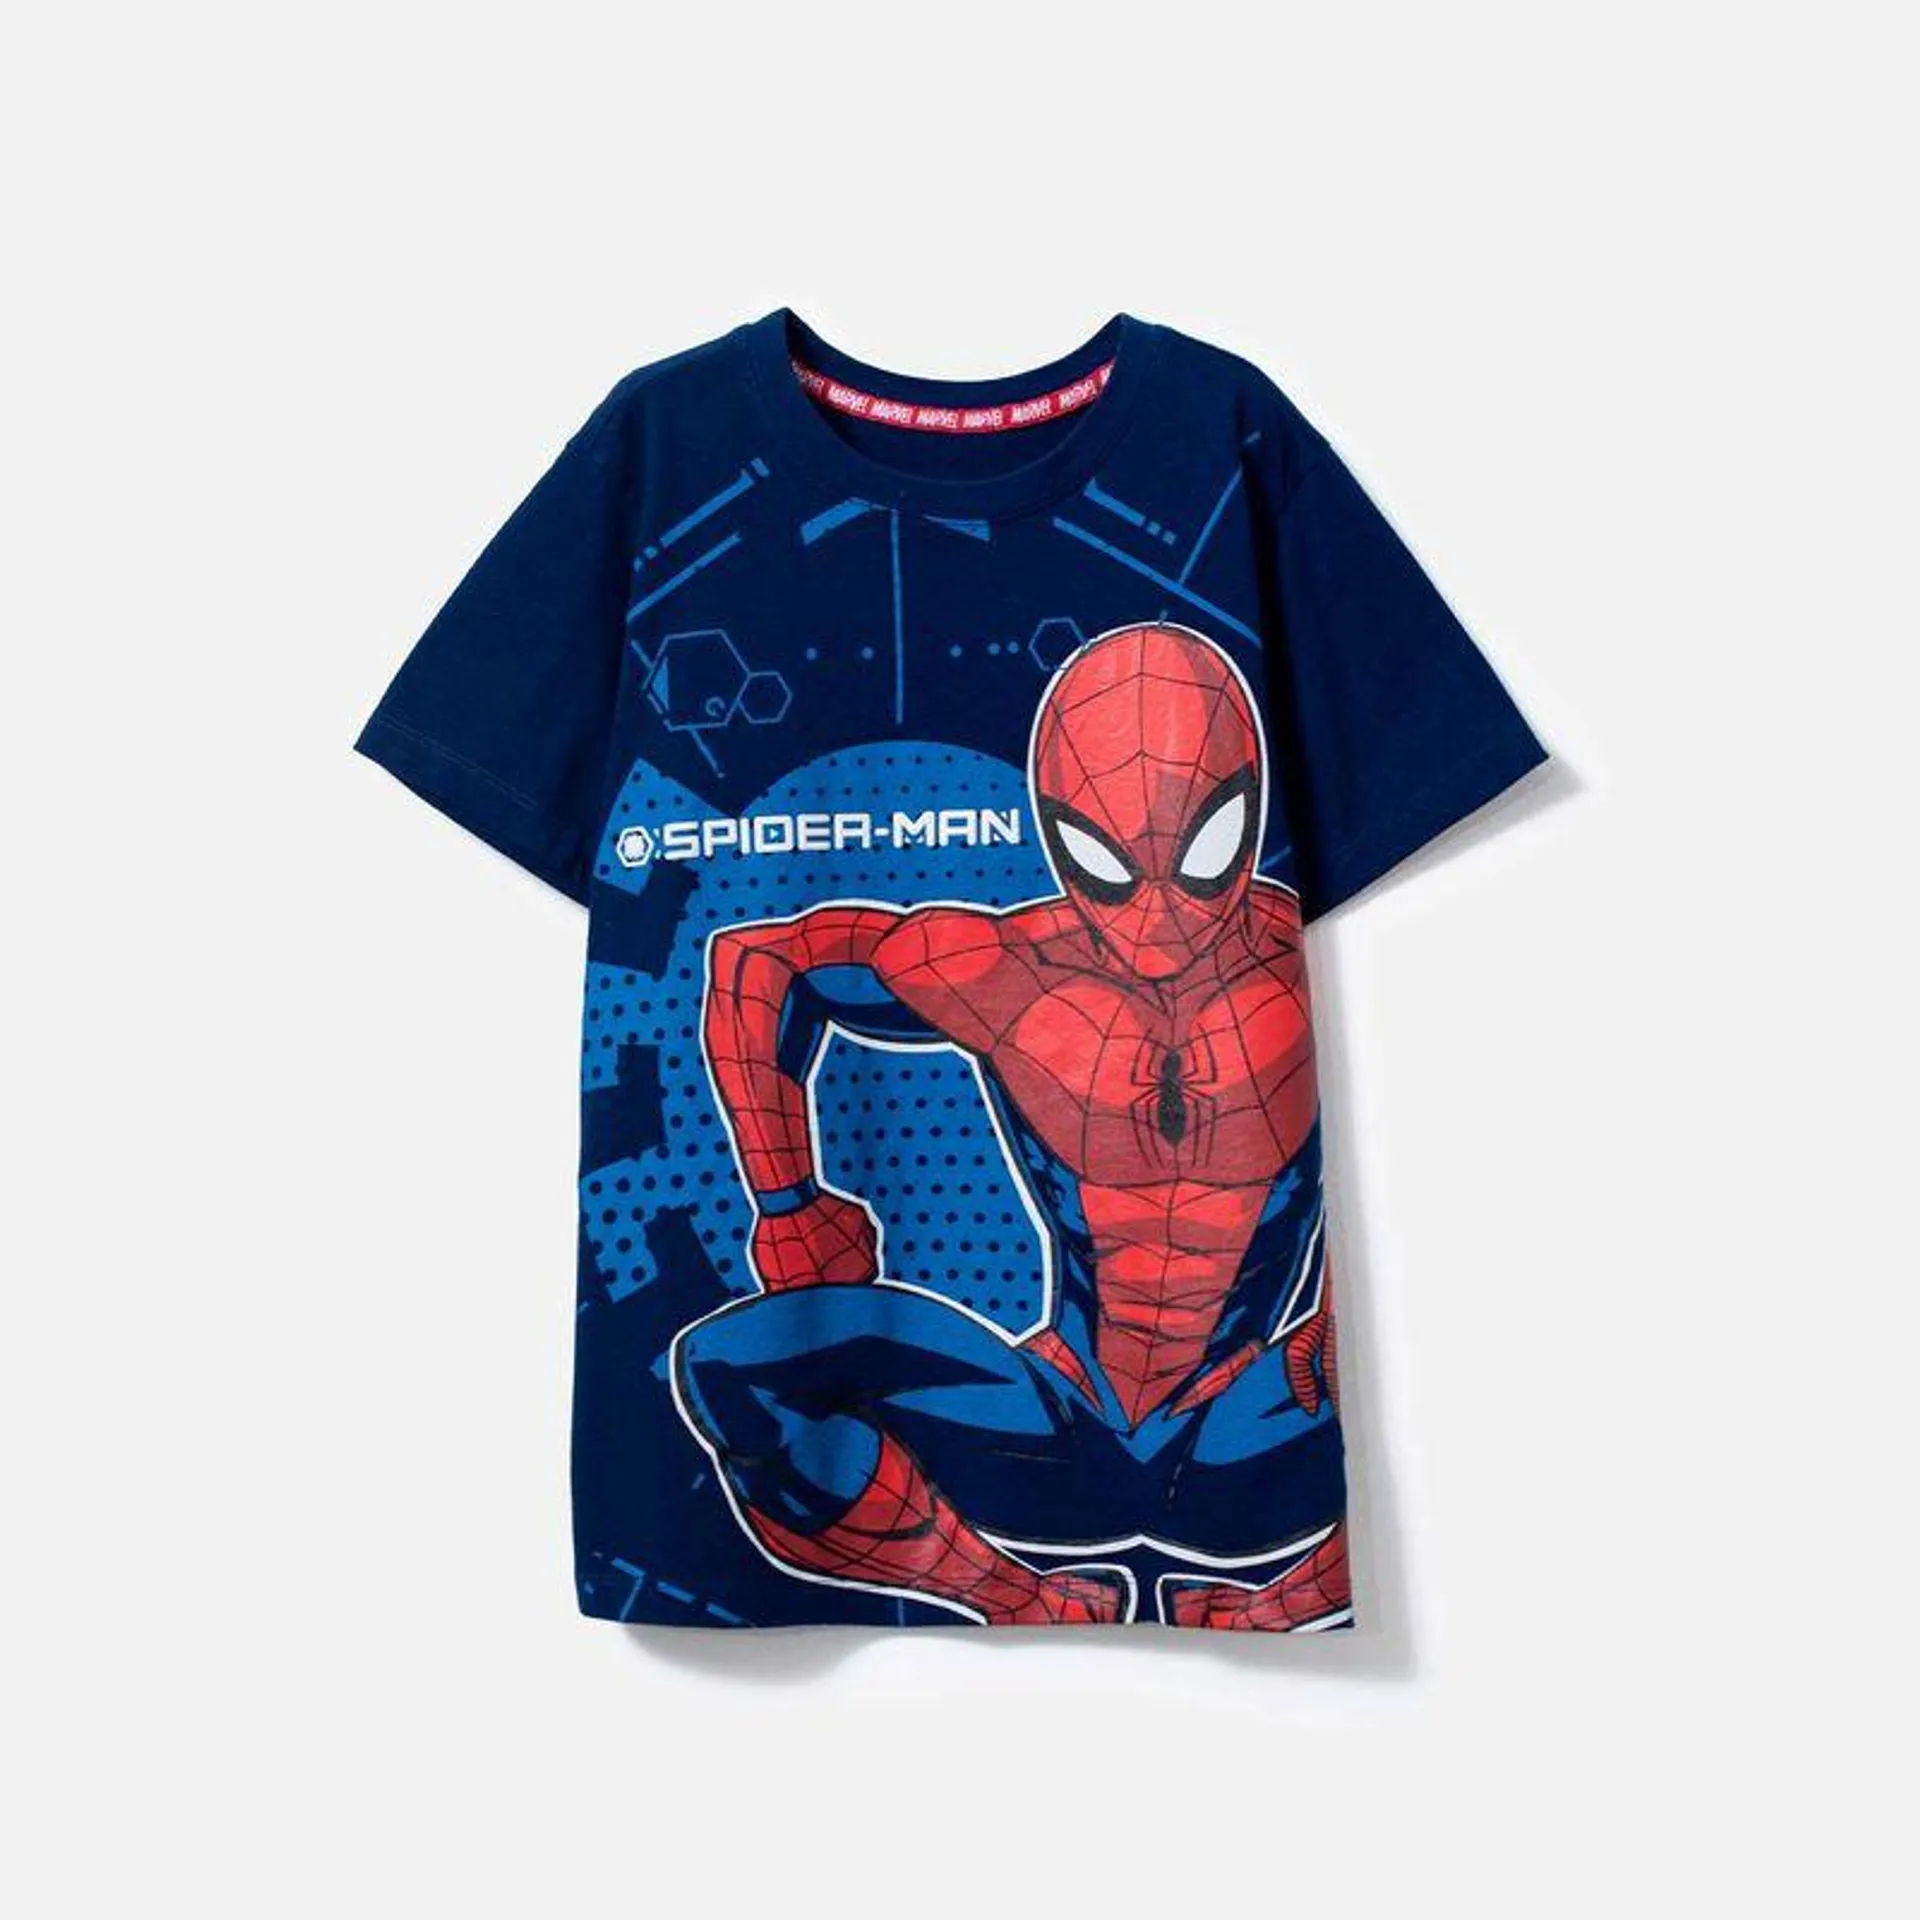 Camiseta de SpiderMan manga corta azul para niño